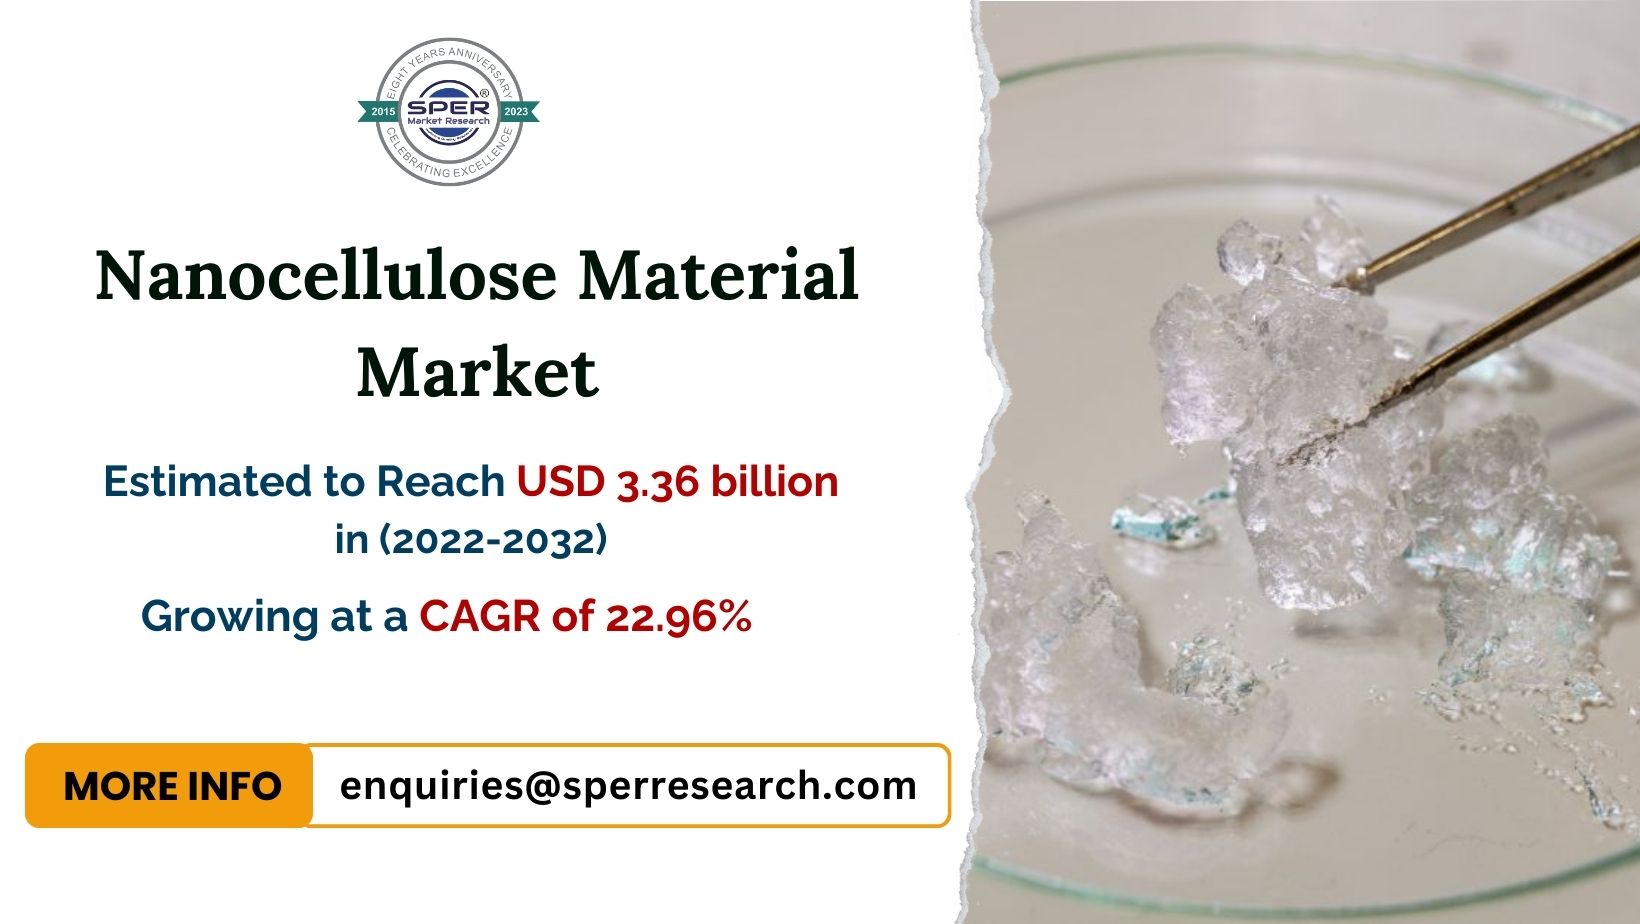 Nanocellulose Materials Market